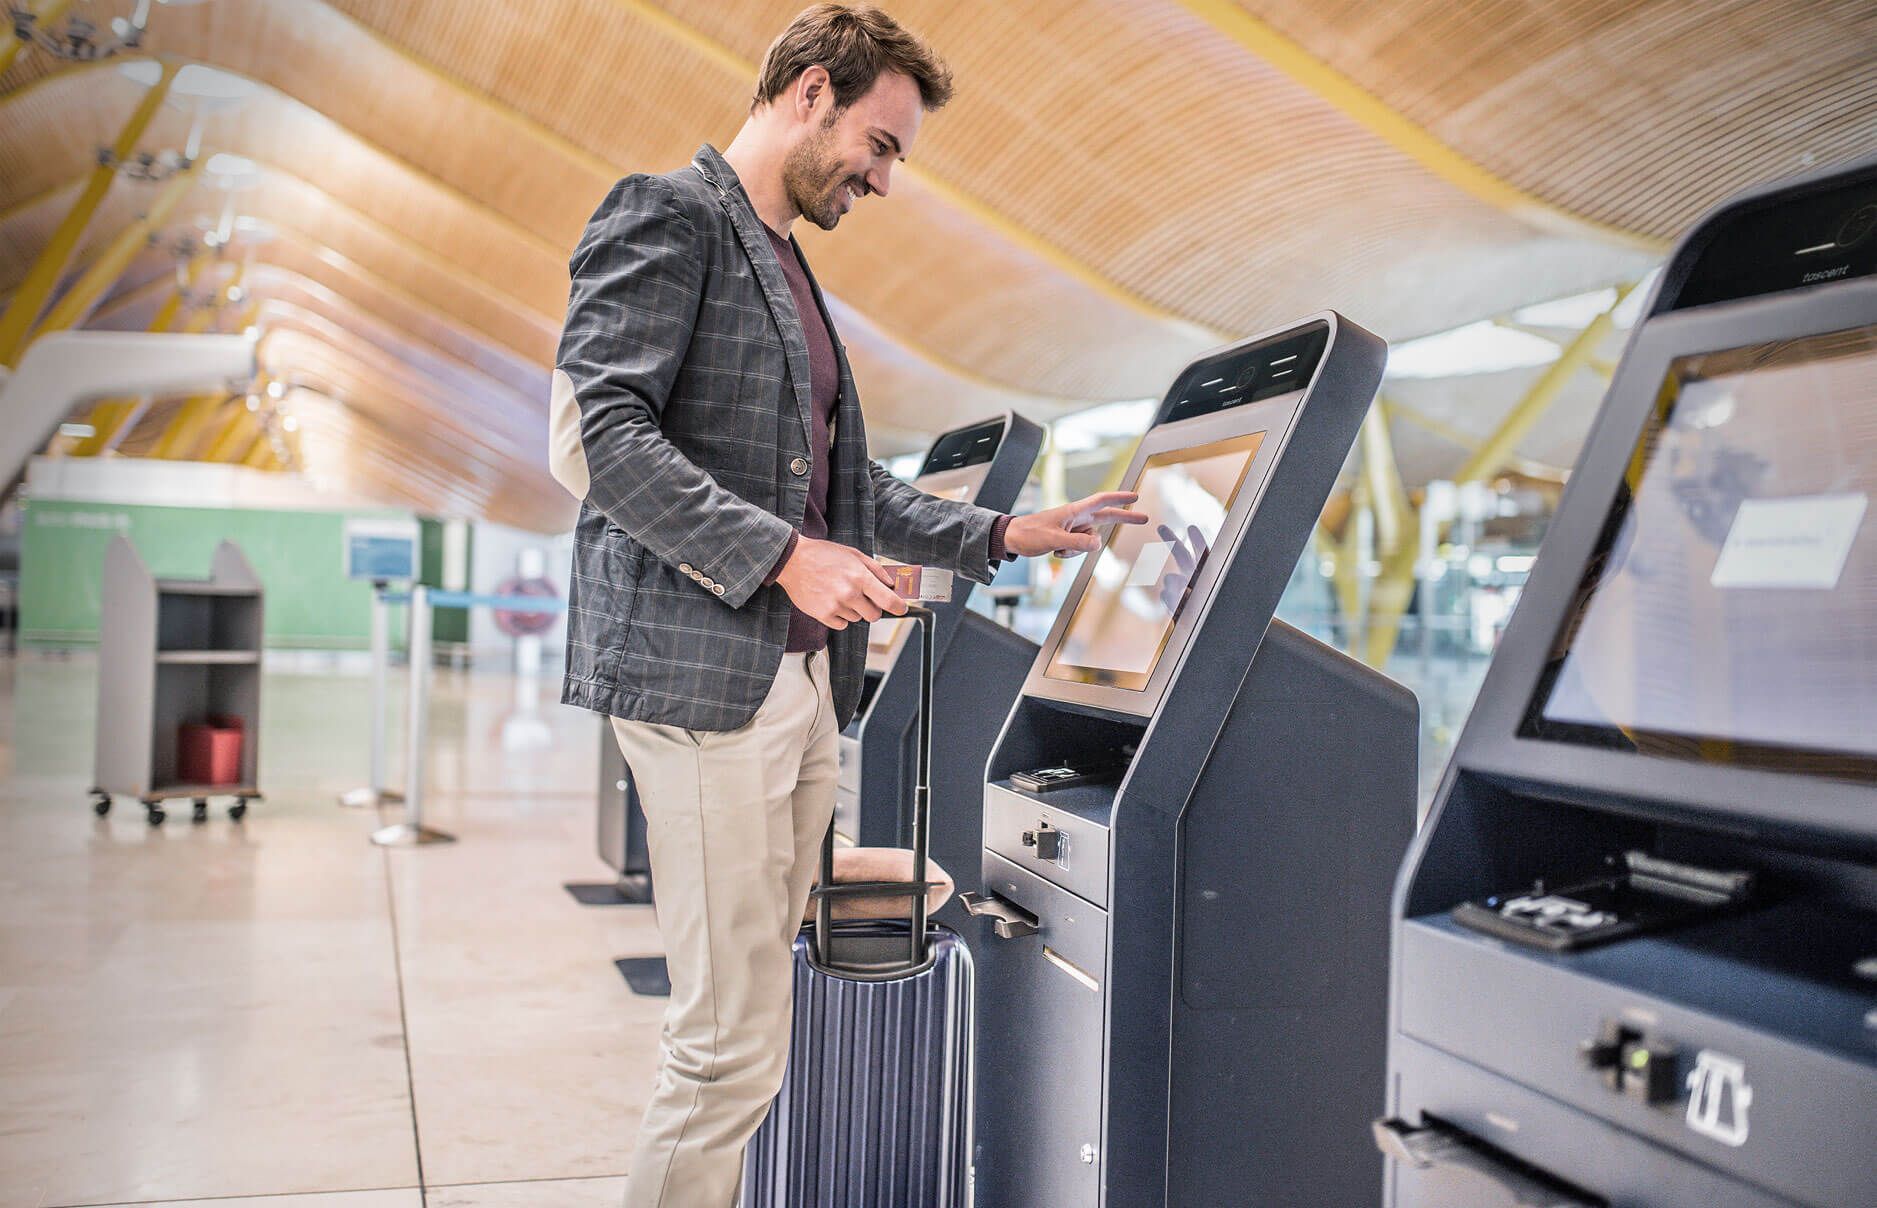 Biometric Kiosk Machine for Better Customer Experience